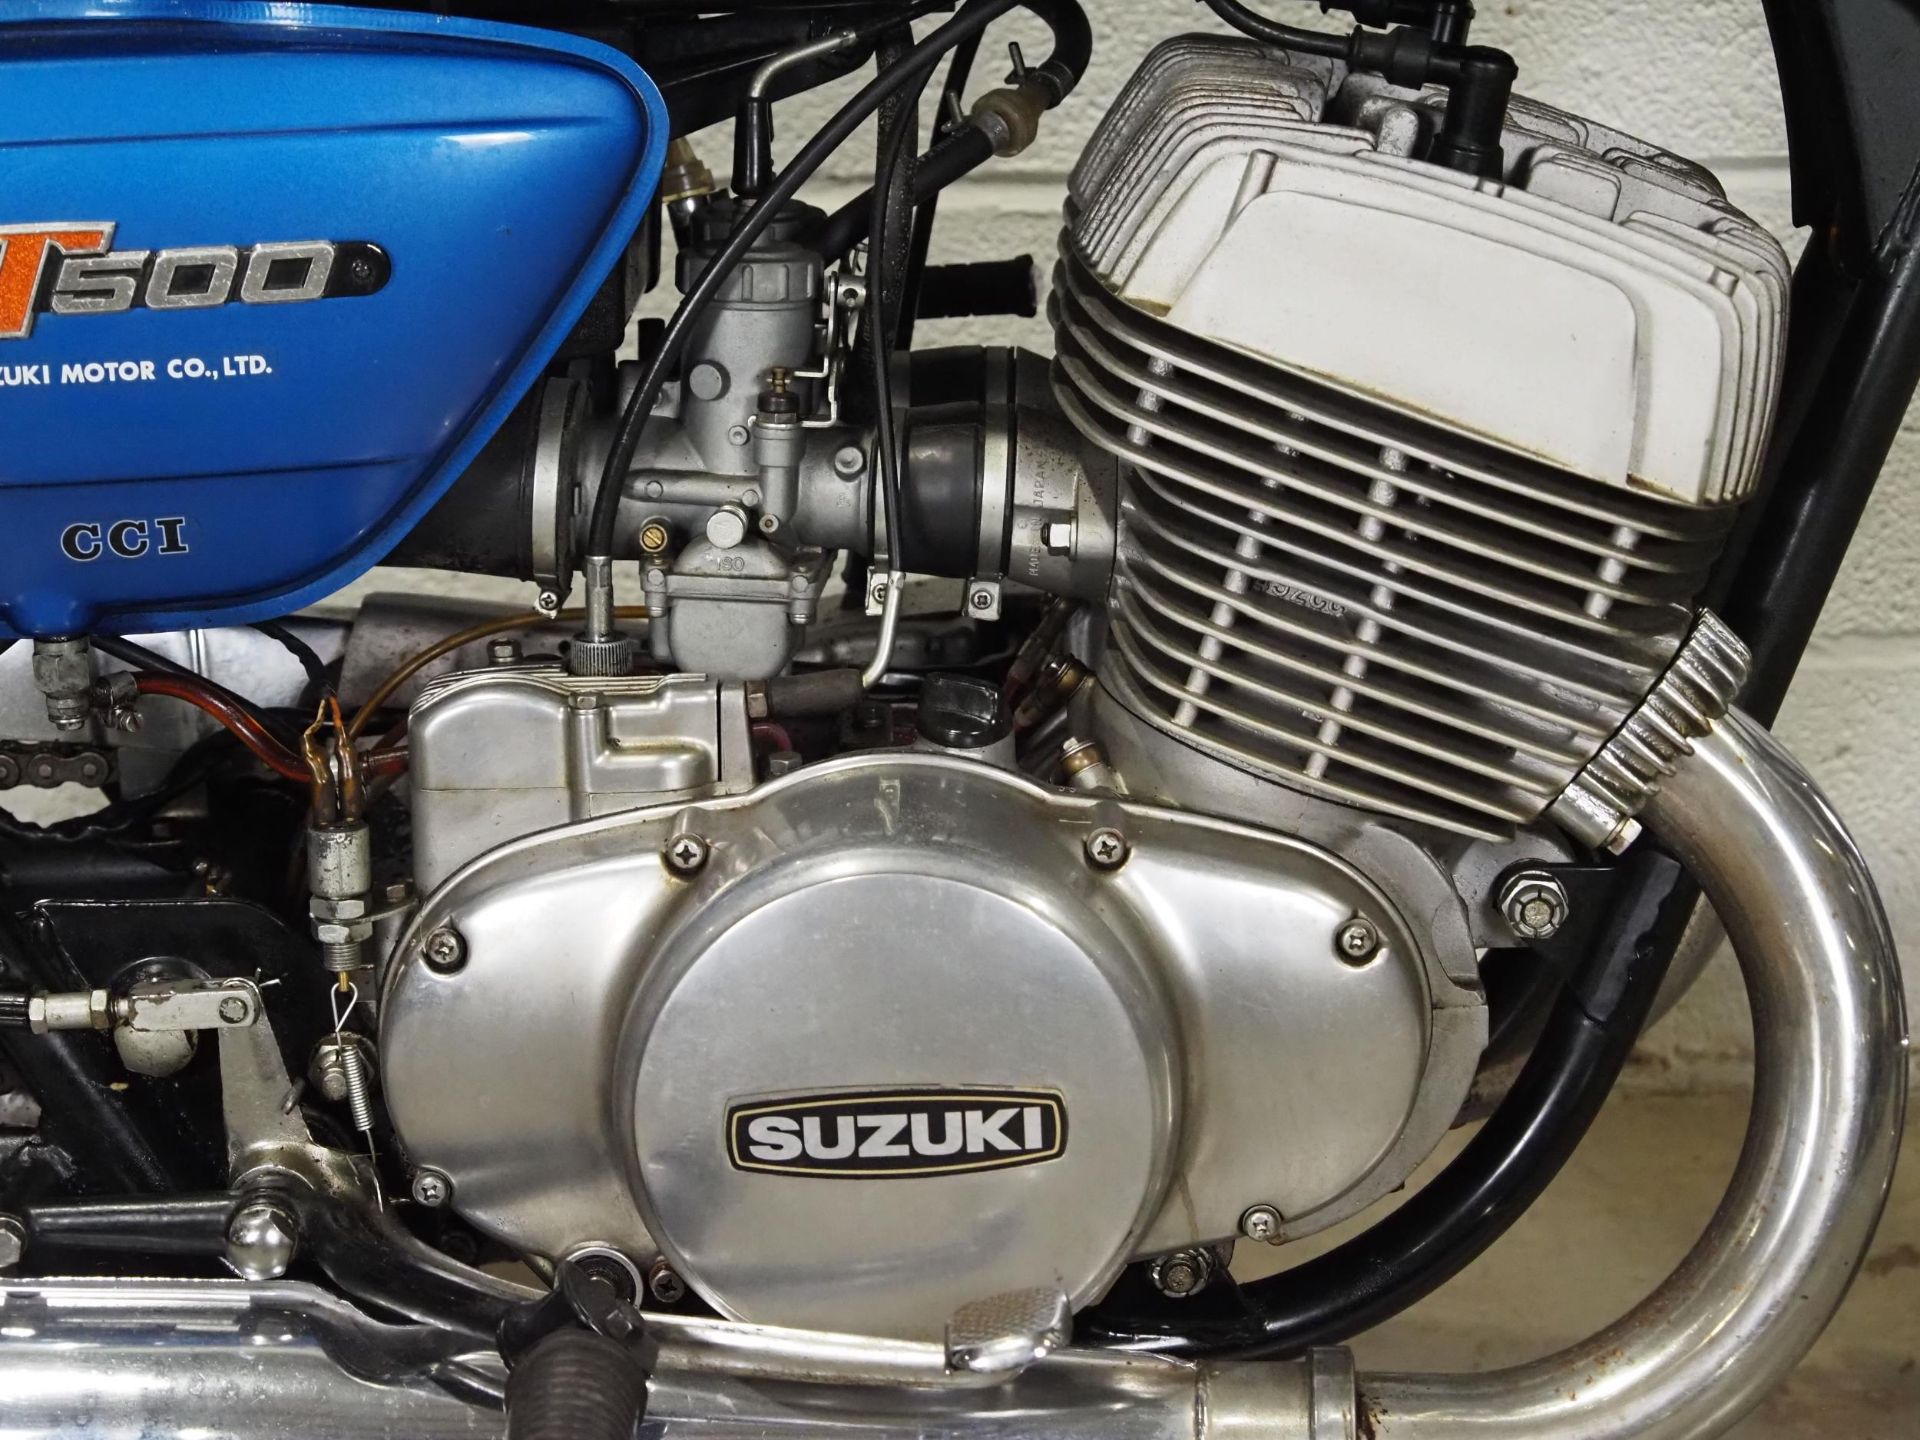 Suzuki GT500 motorcycle. 1976. 493cc. Frame No.100193 Engine No. 100445 UK supplied bike. Runs and - Image 5 of 7